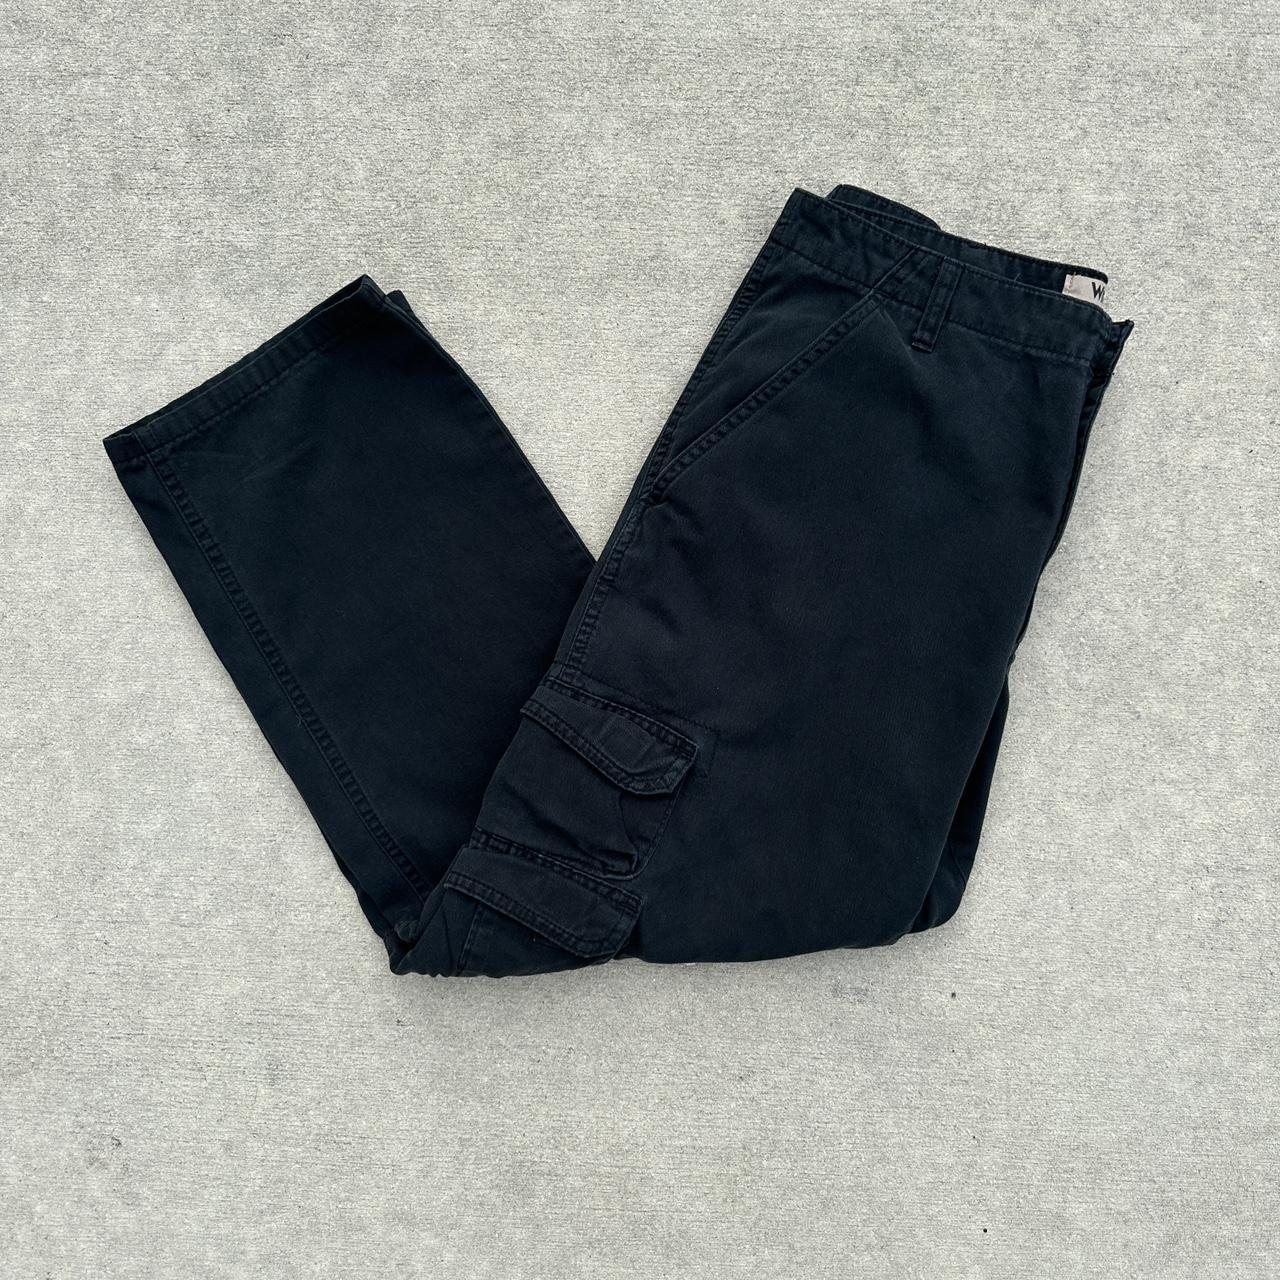 Black Wrangler Cargo Pants Size 34x30 Super clean,... - Depop